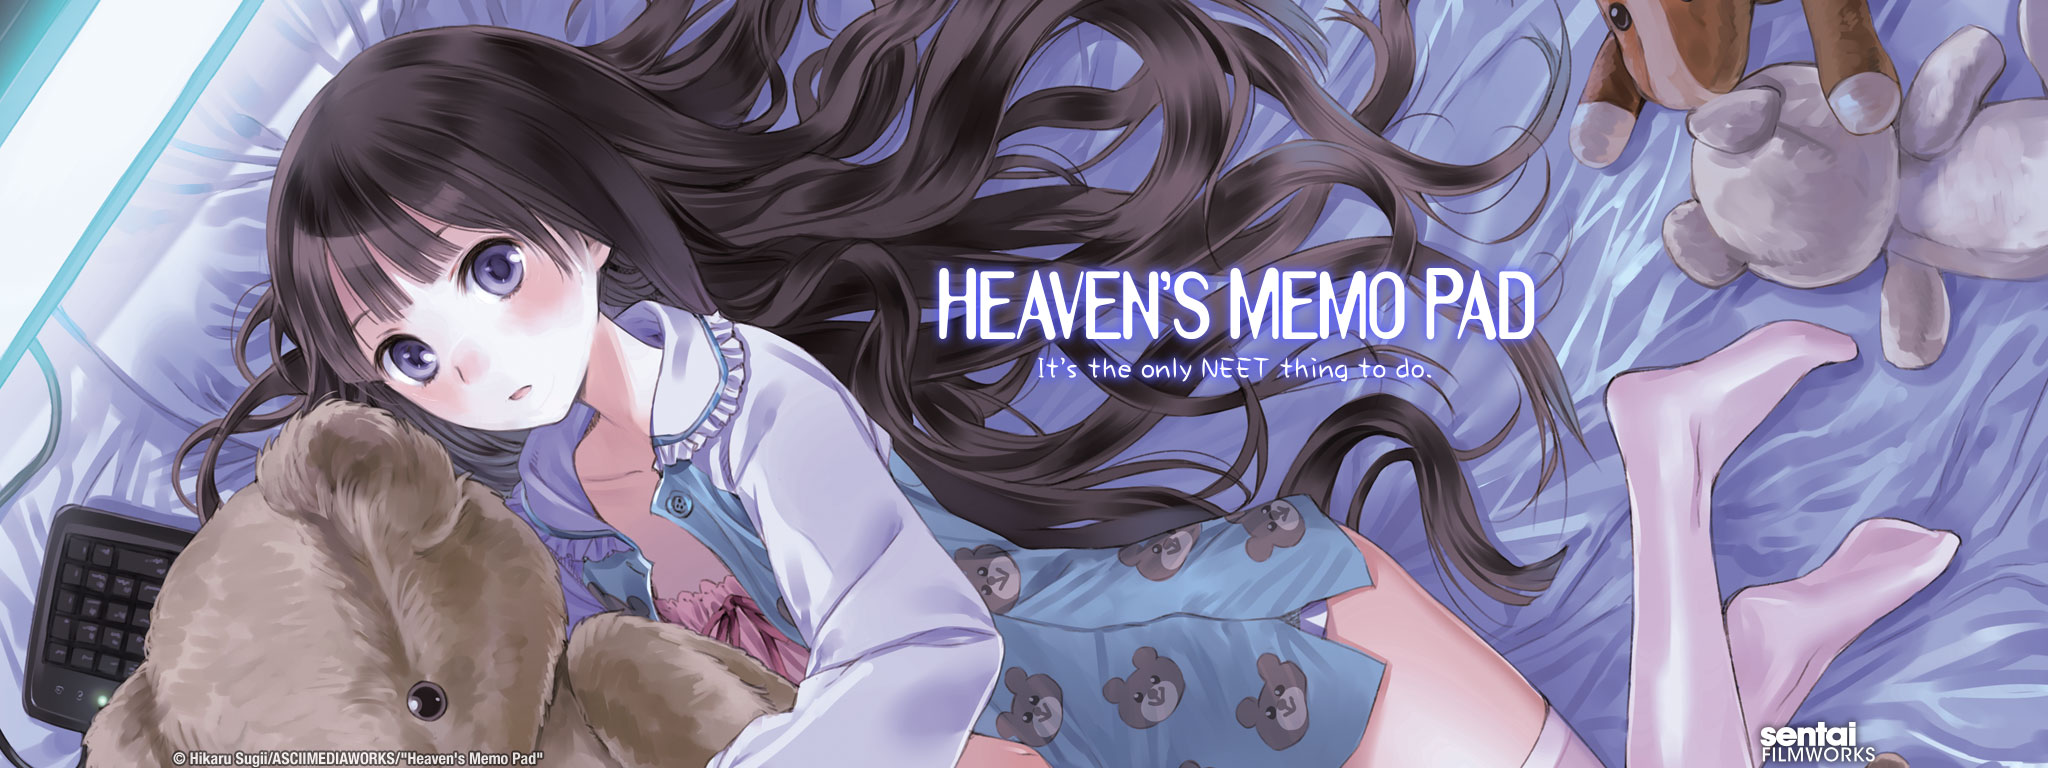 Title Art for Heaven's Memo Pad